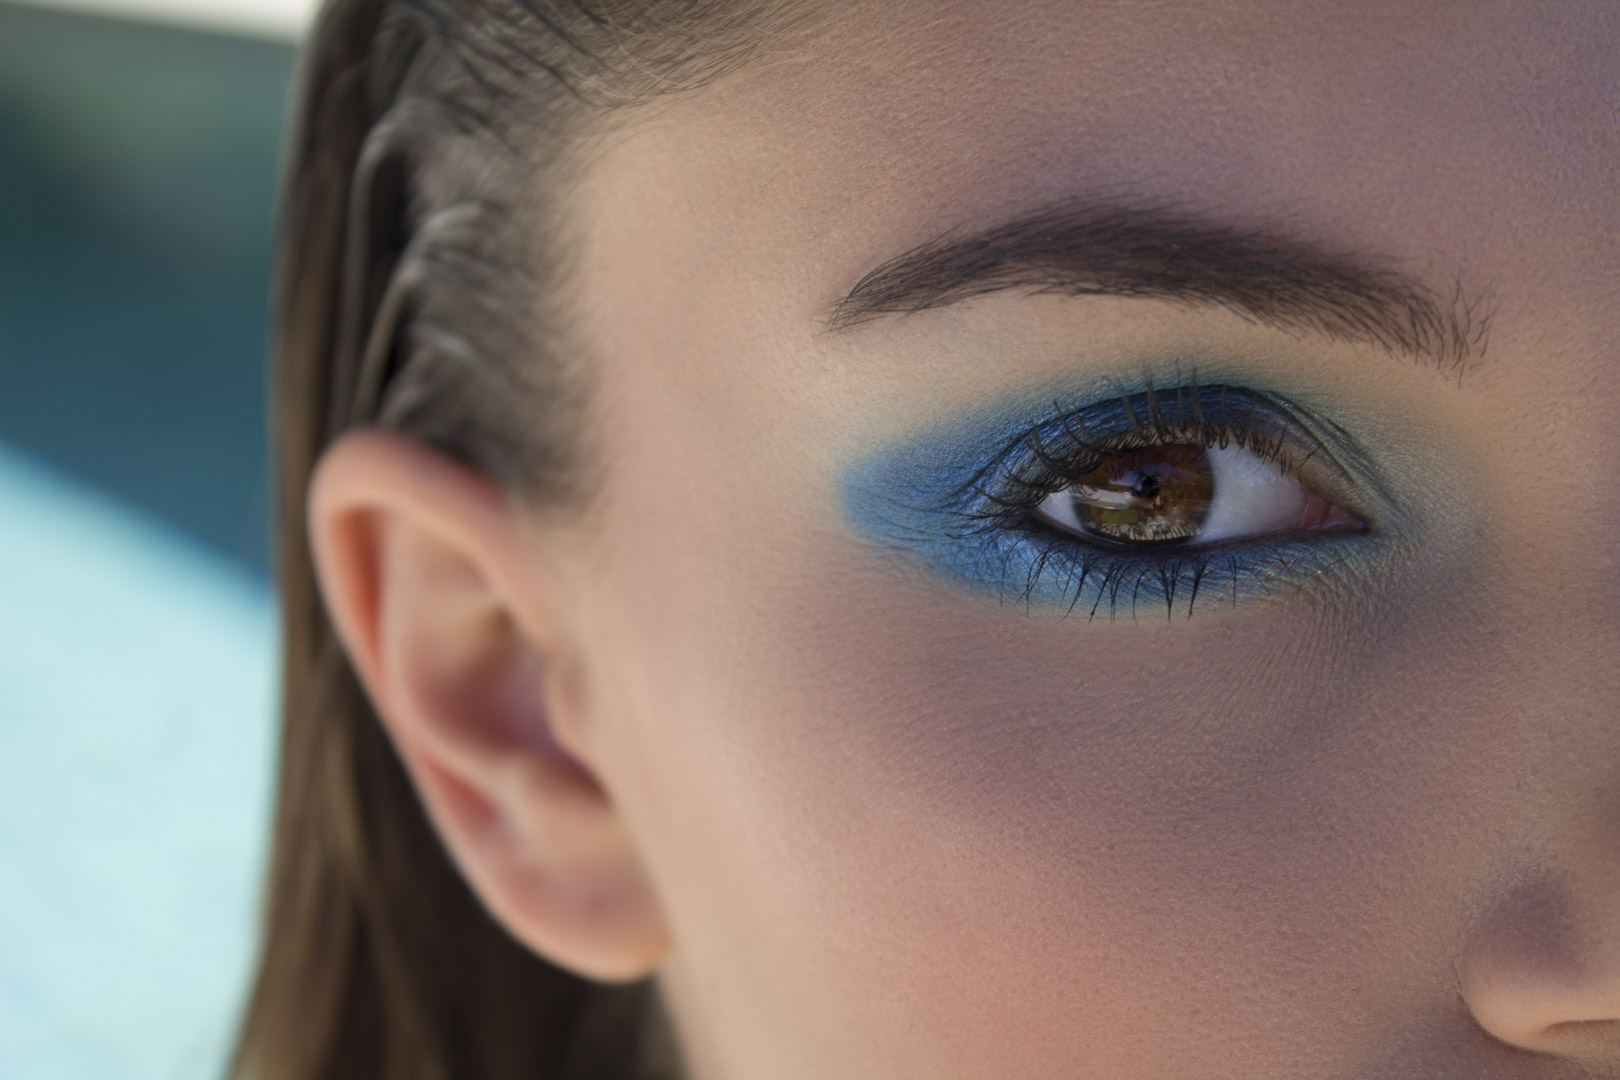 Make-up artist Lucrezia Bianchini